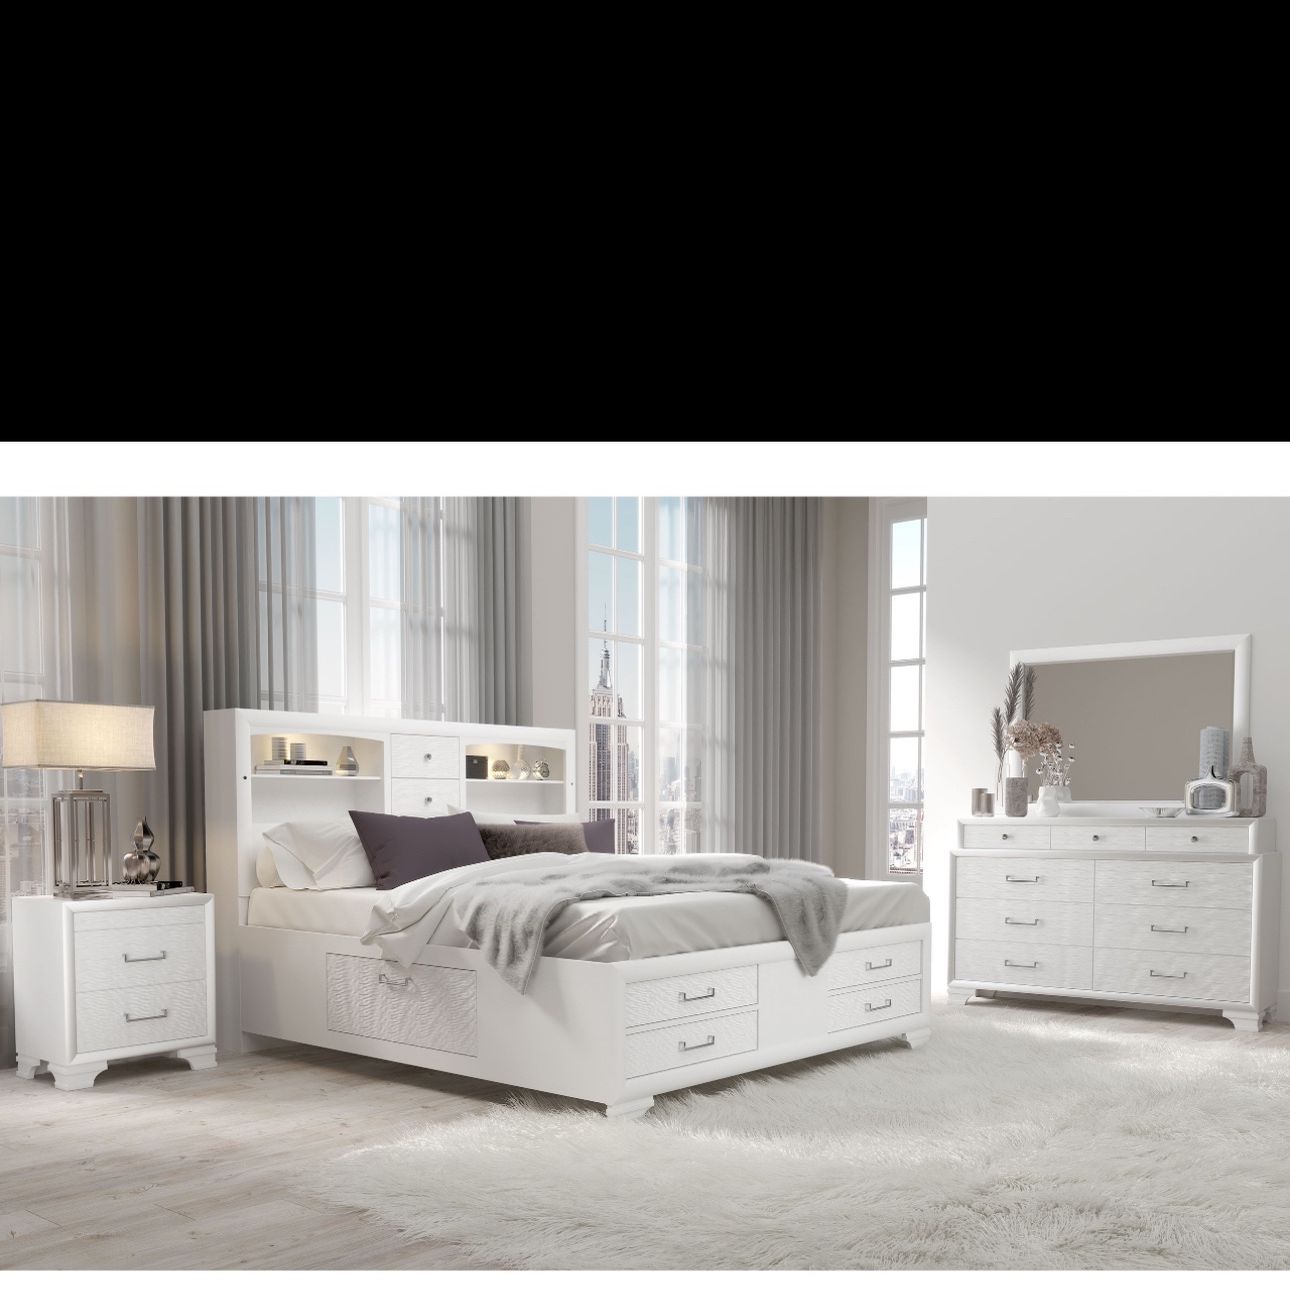 Brand New Complete Bedroom Set For $1499